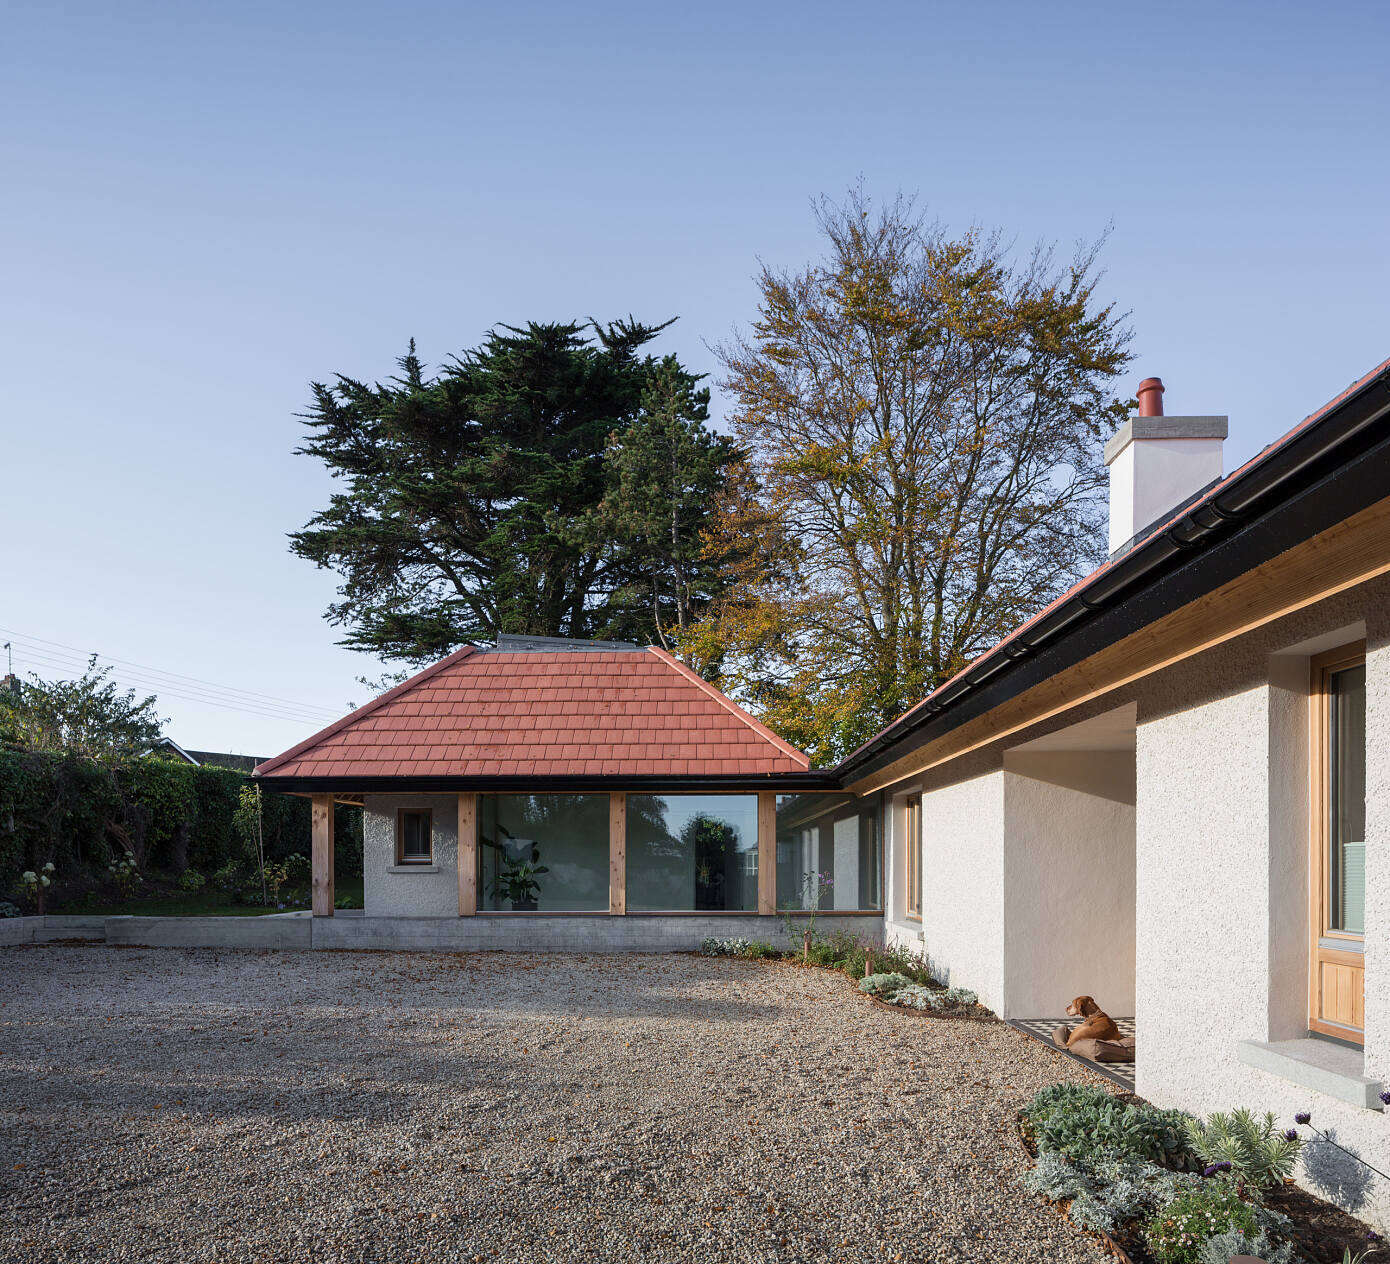 Pavilion House by Robert Bourke Architects